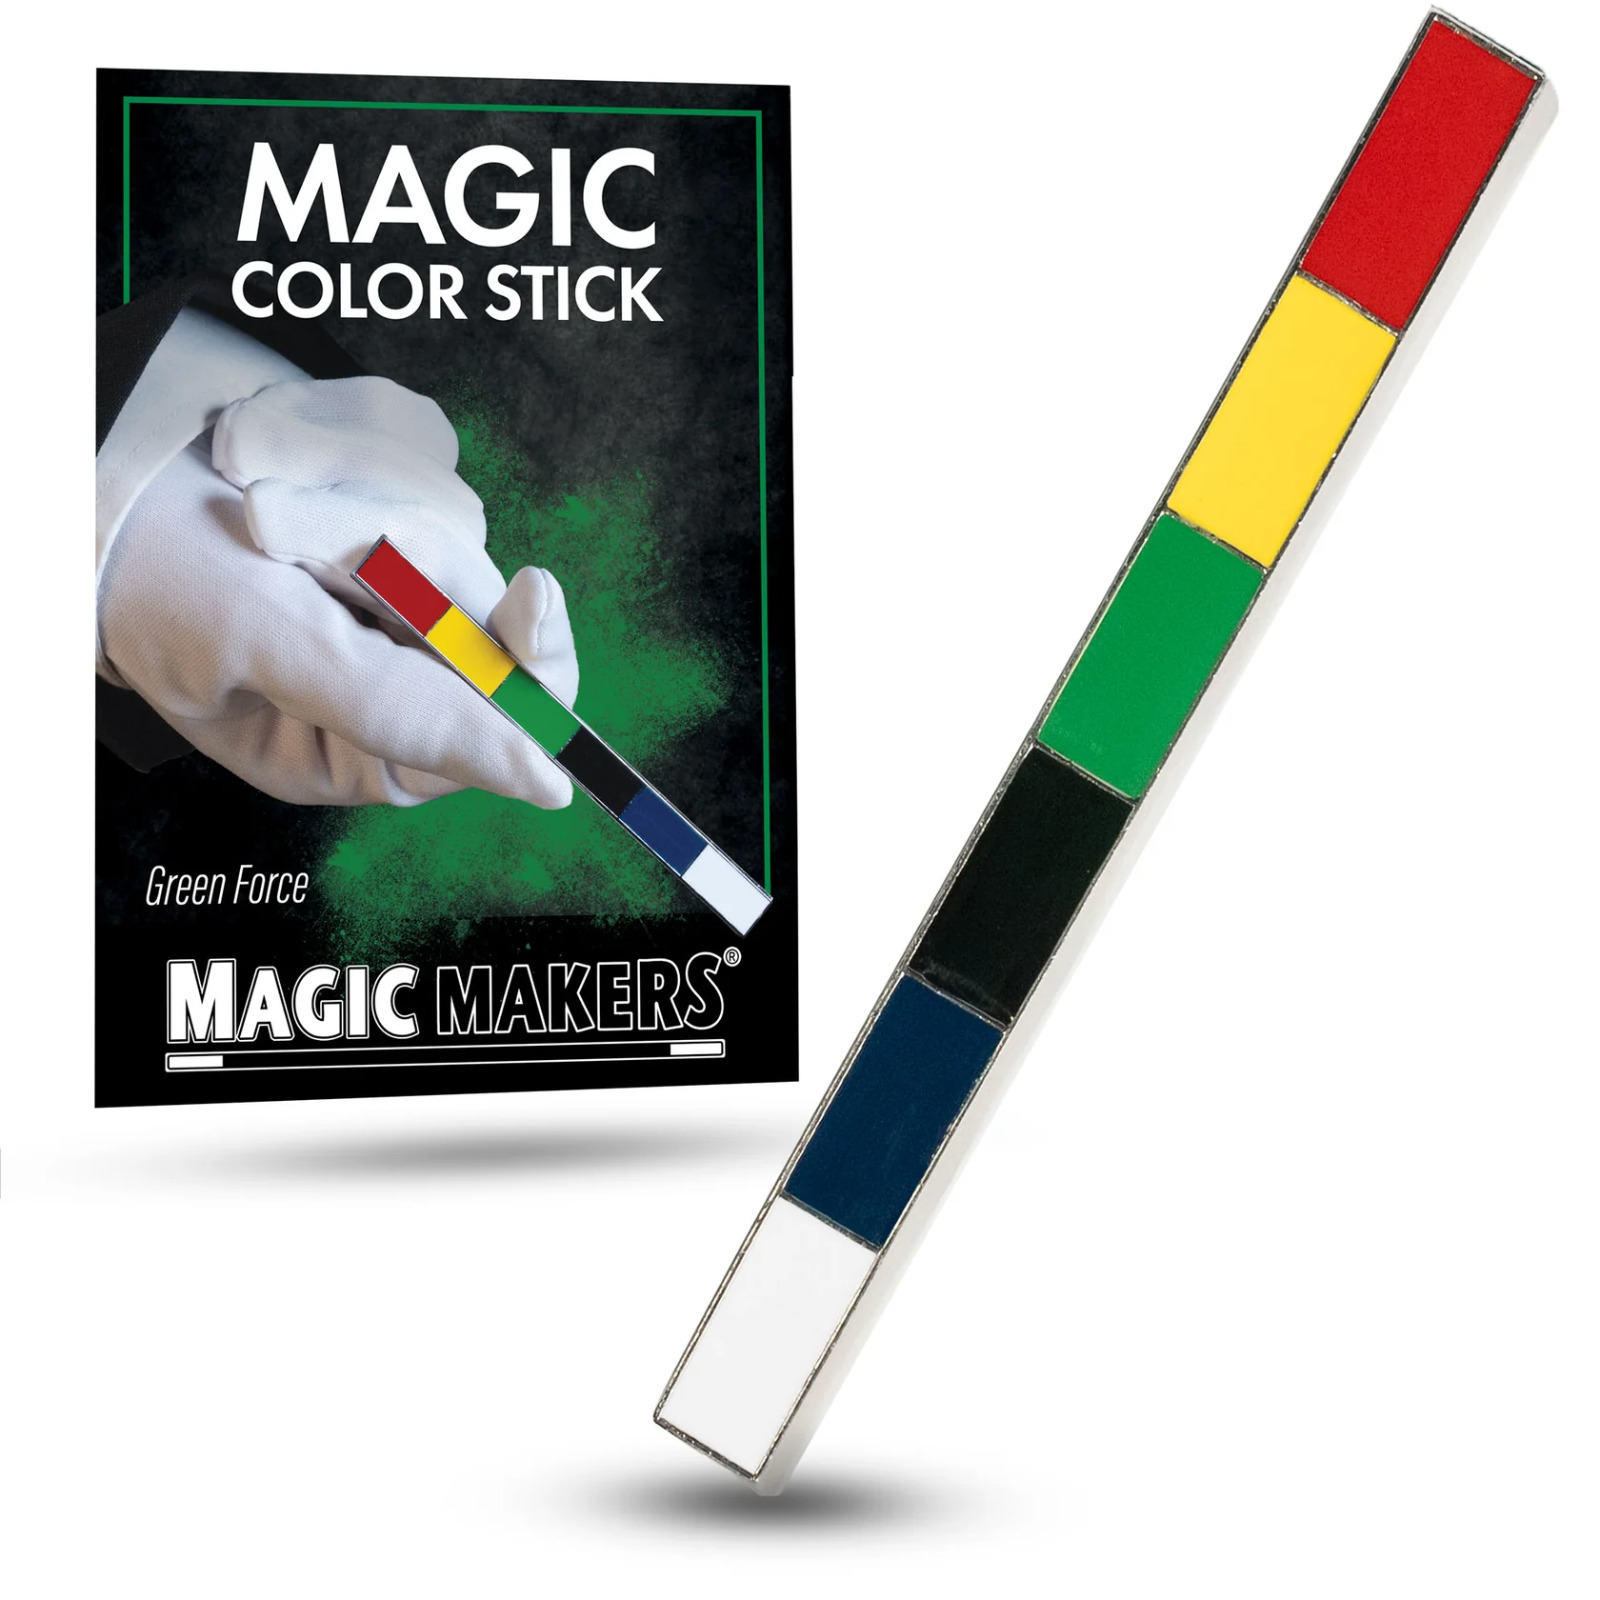 Green METAL MAGIC COLOR STICK Trick Paddle Pocket Hot Rod Wand Change Mental Toy